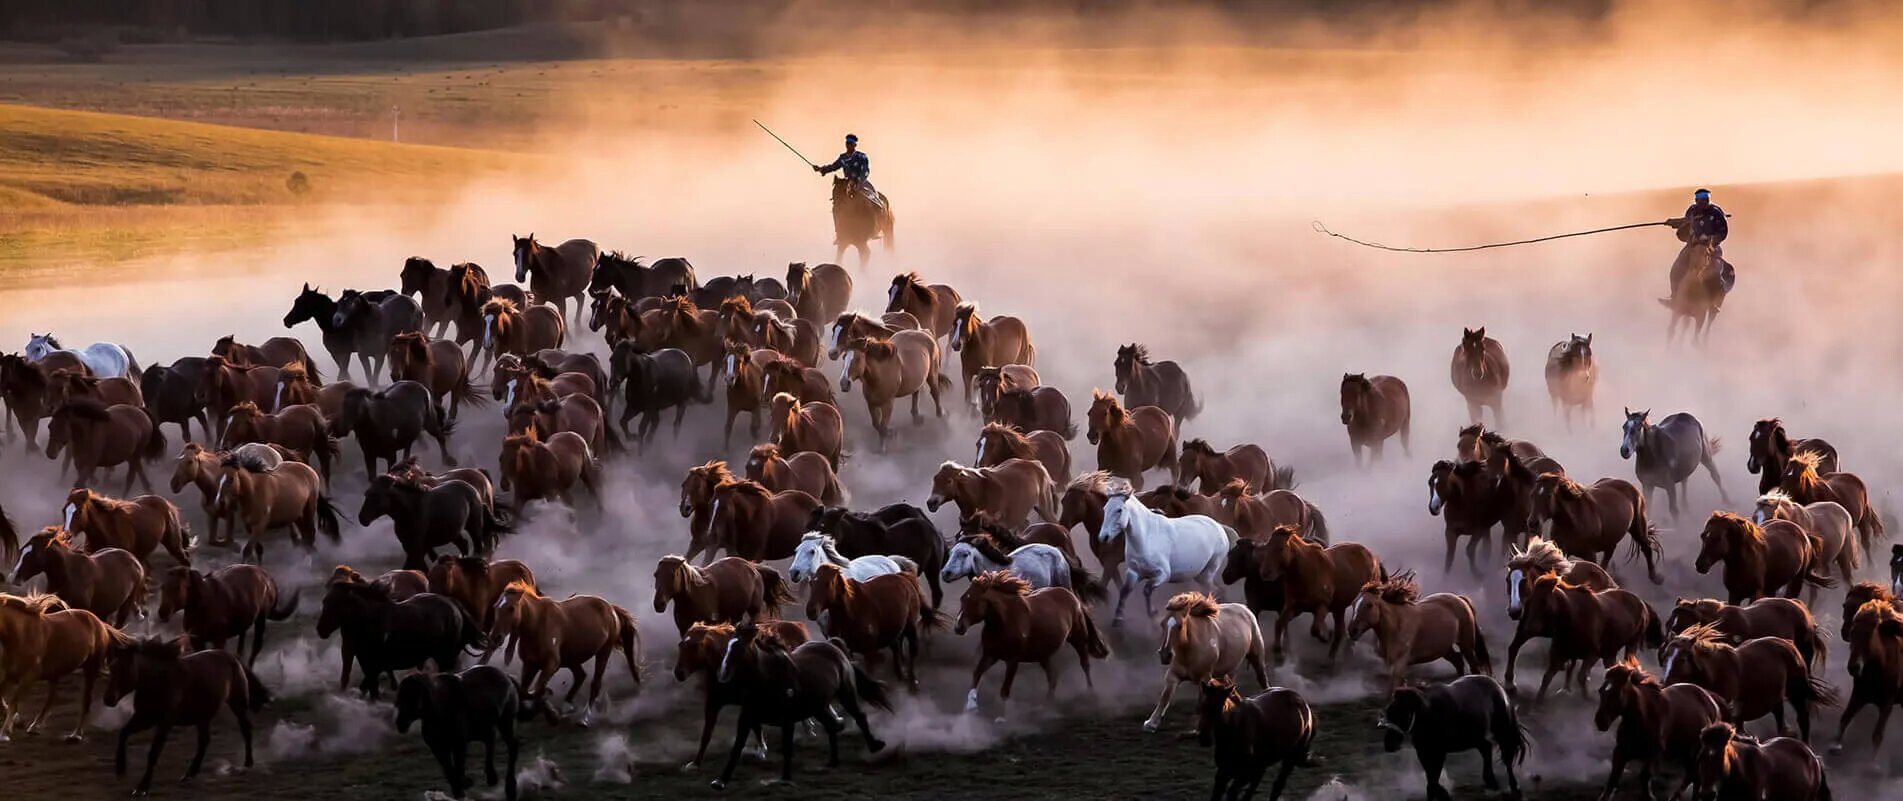 mongolia-horse-farming_proc.jpg